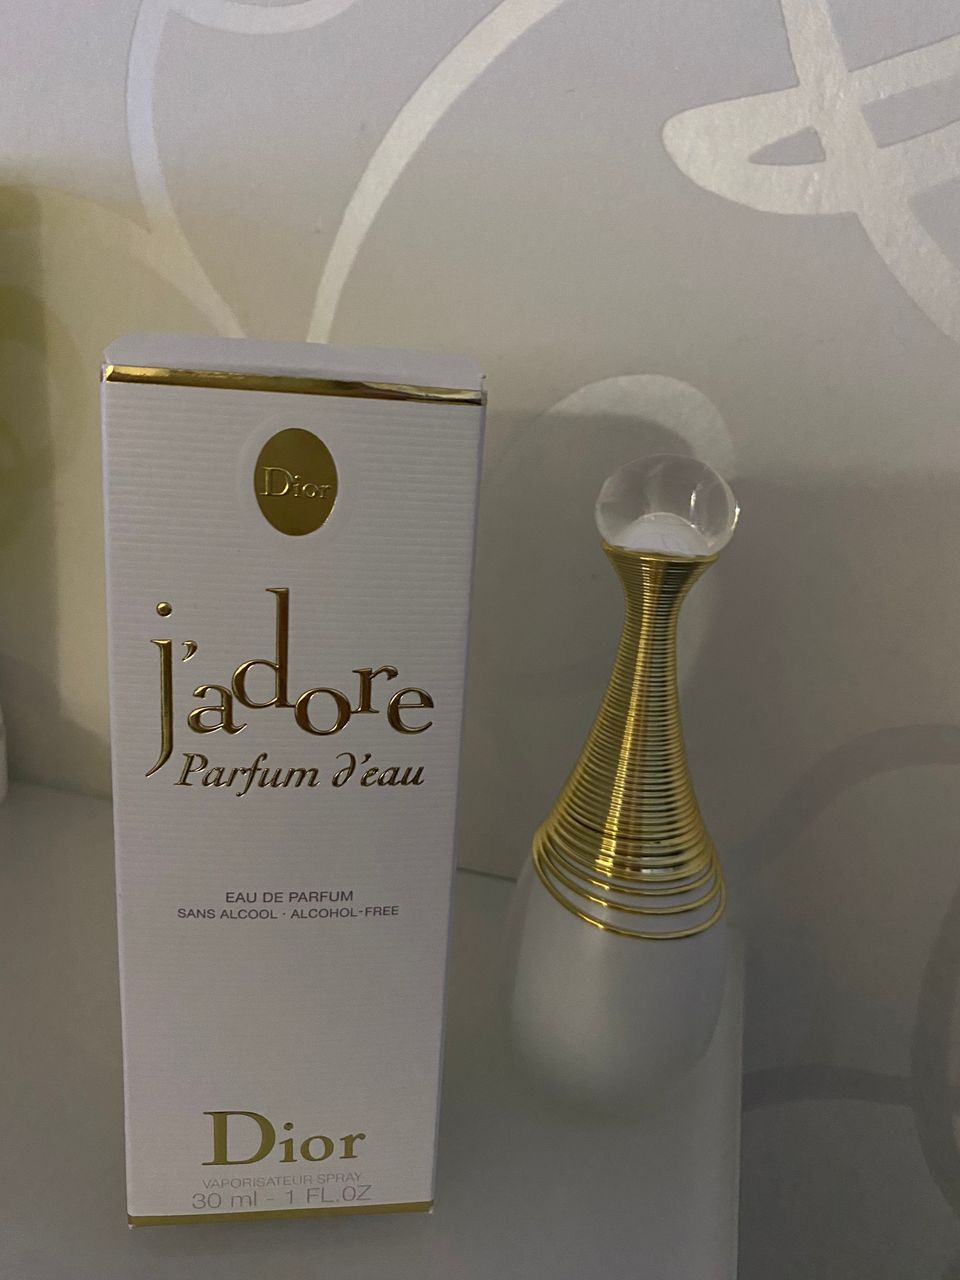 Jadore parfum